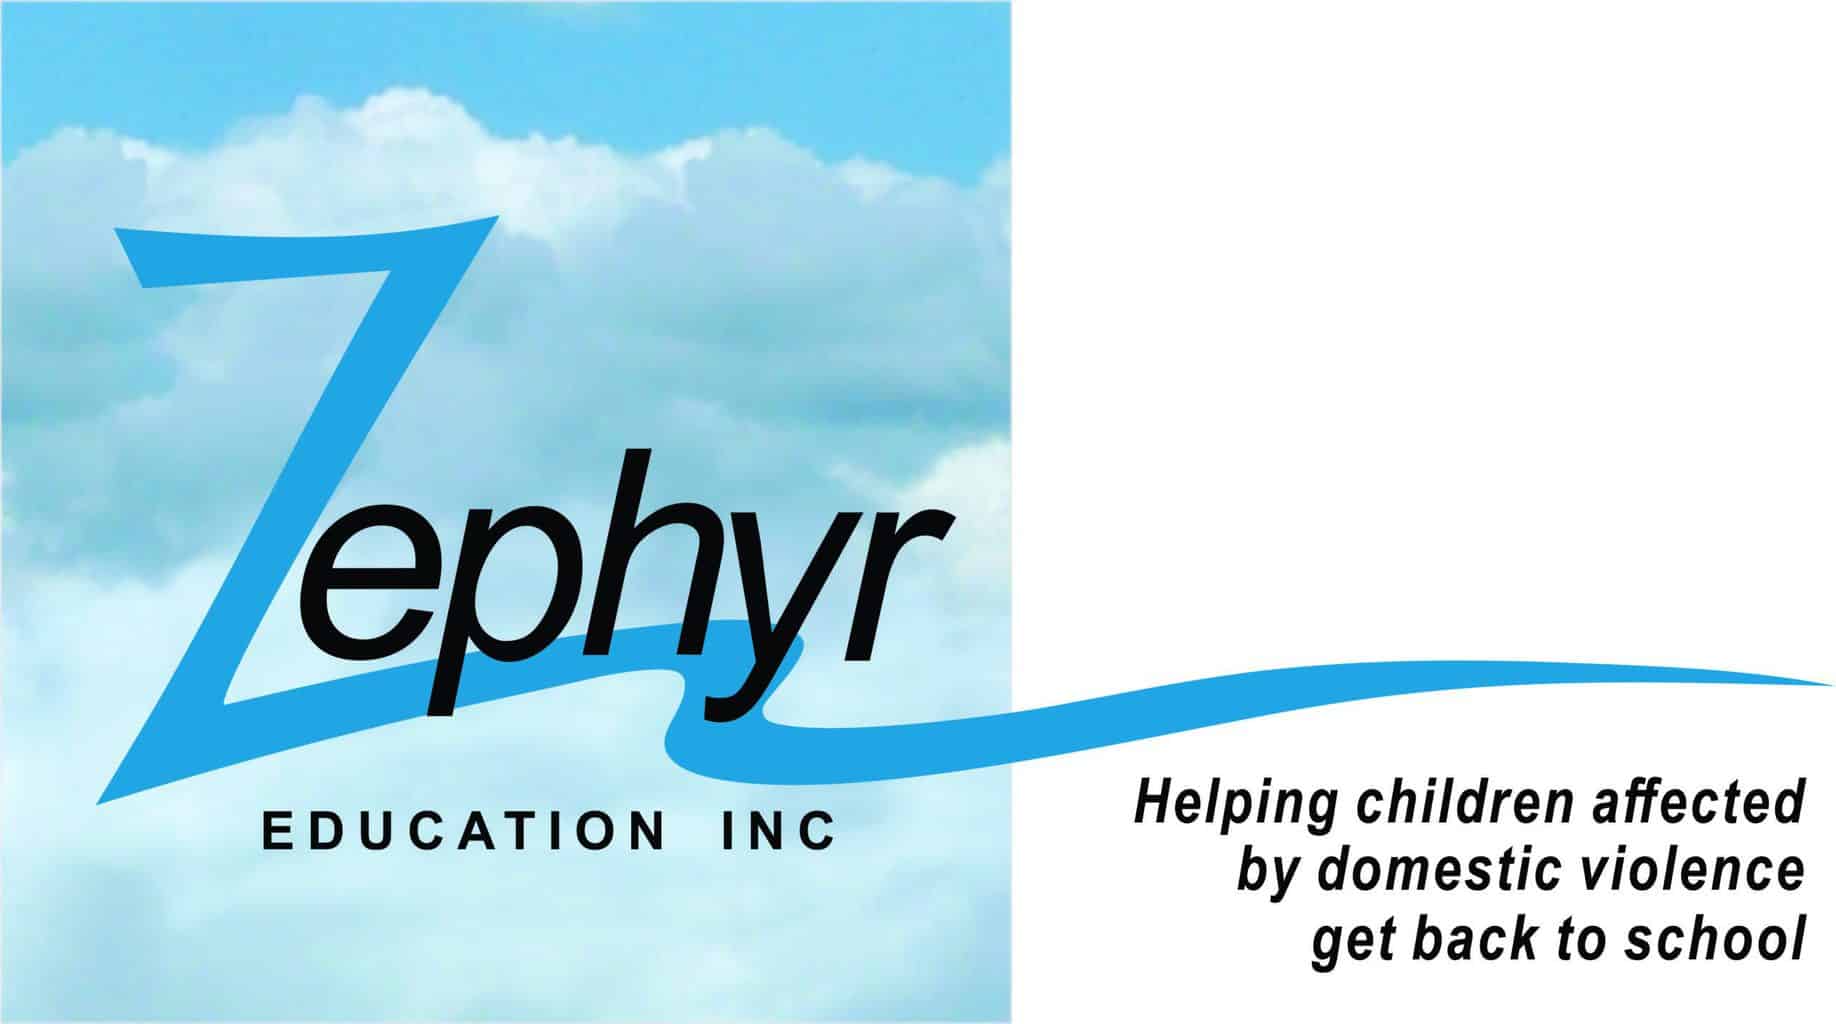 Zephyr Education Inc